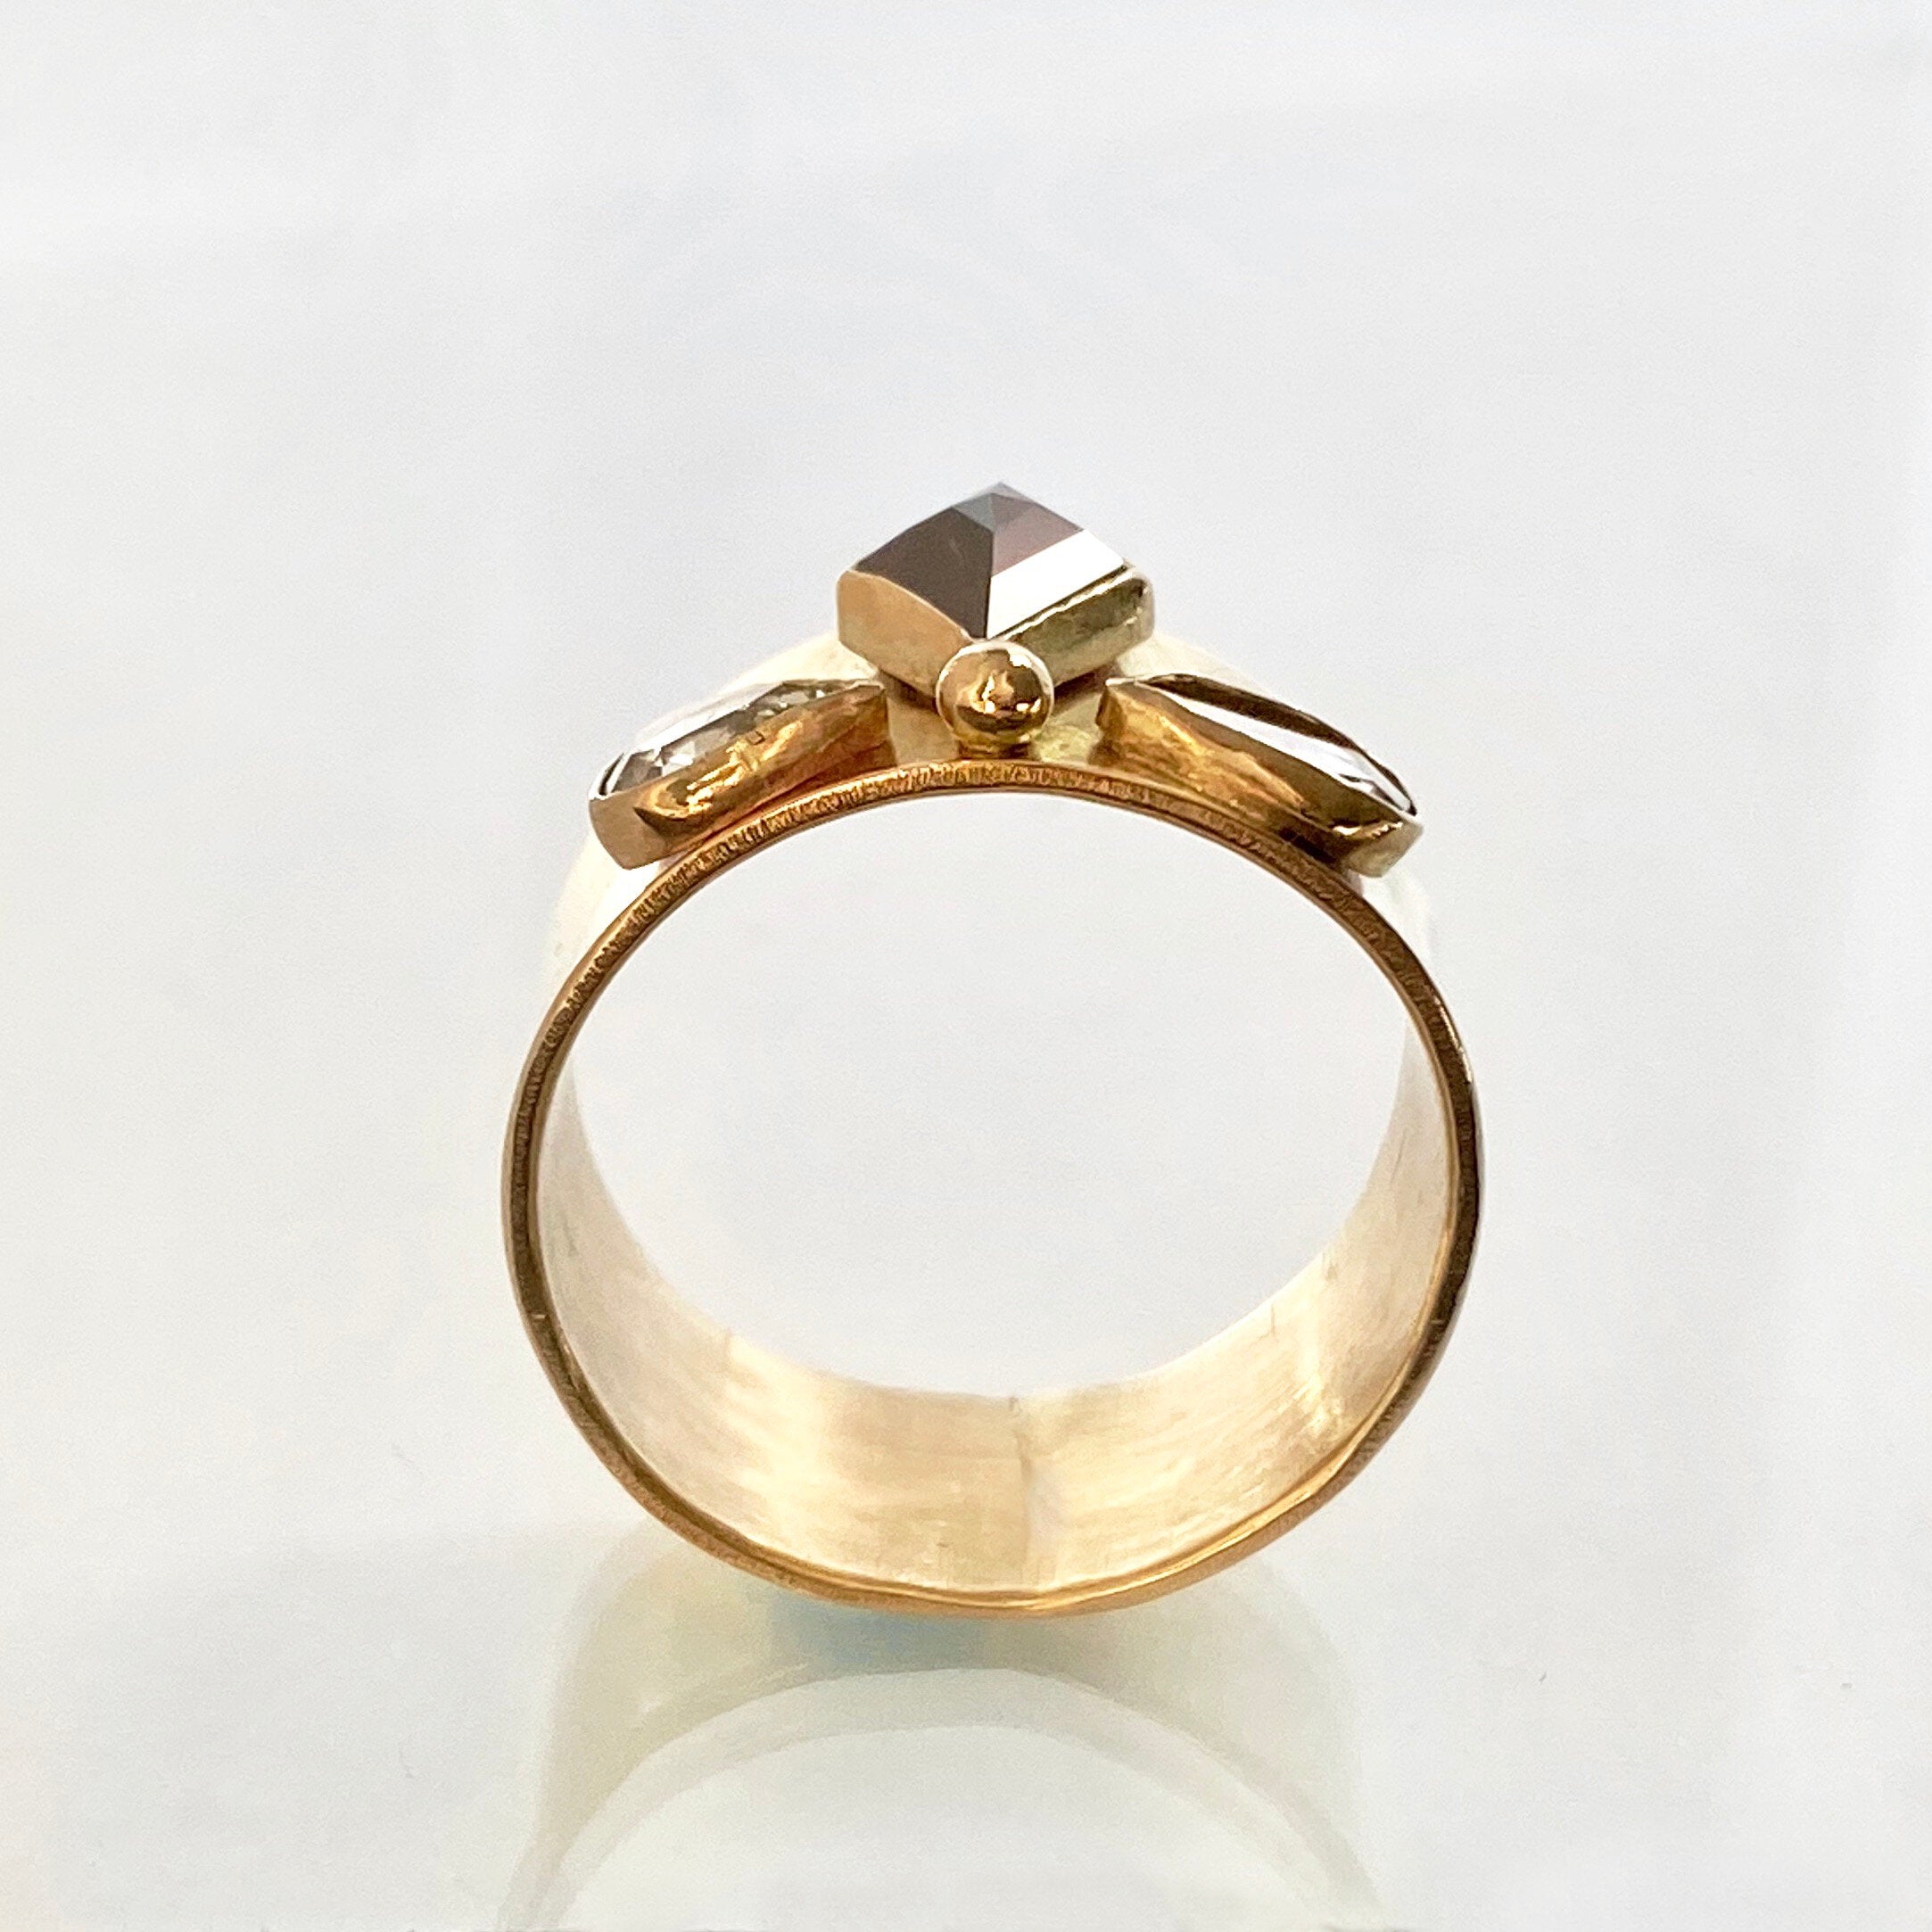 14K Cognac Diamond Trio Ring, Three Diamond Ring, One of a Kind, SOLID Gold